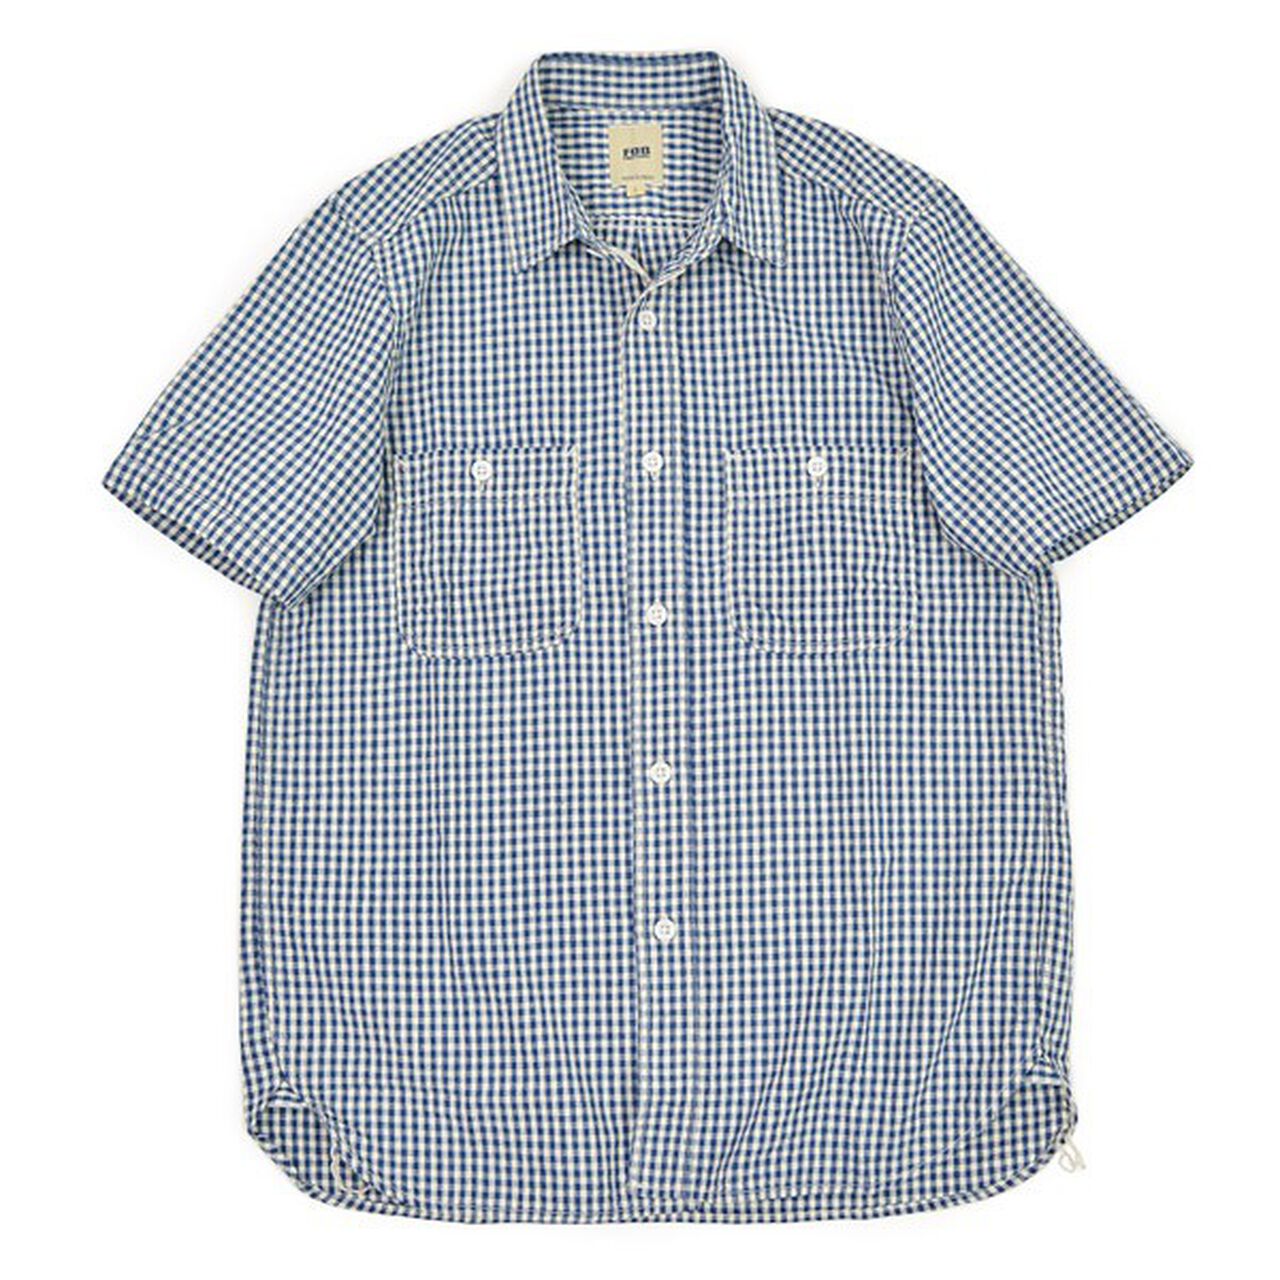 F3404 Short sleeve gingham check work shirt,, large image number 2